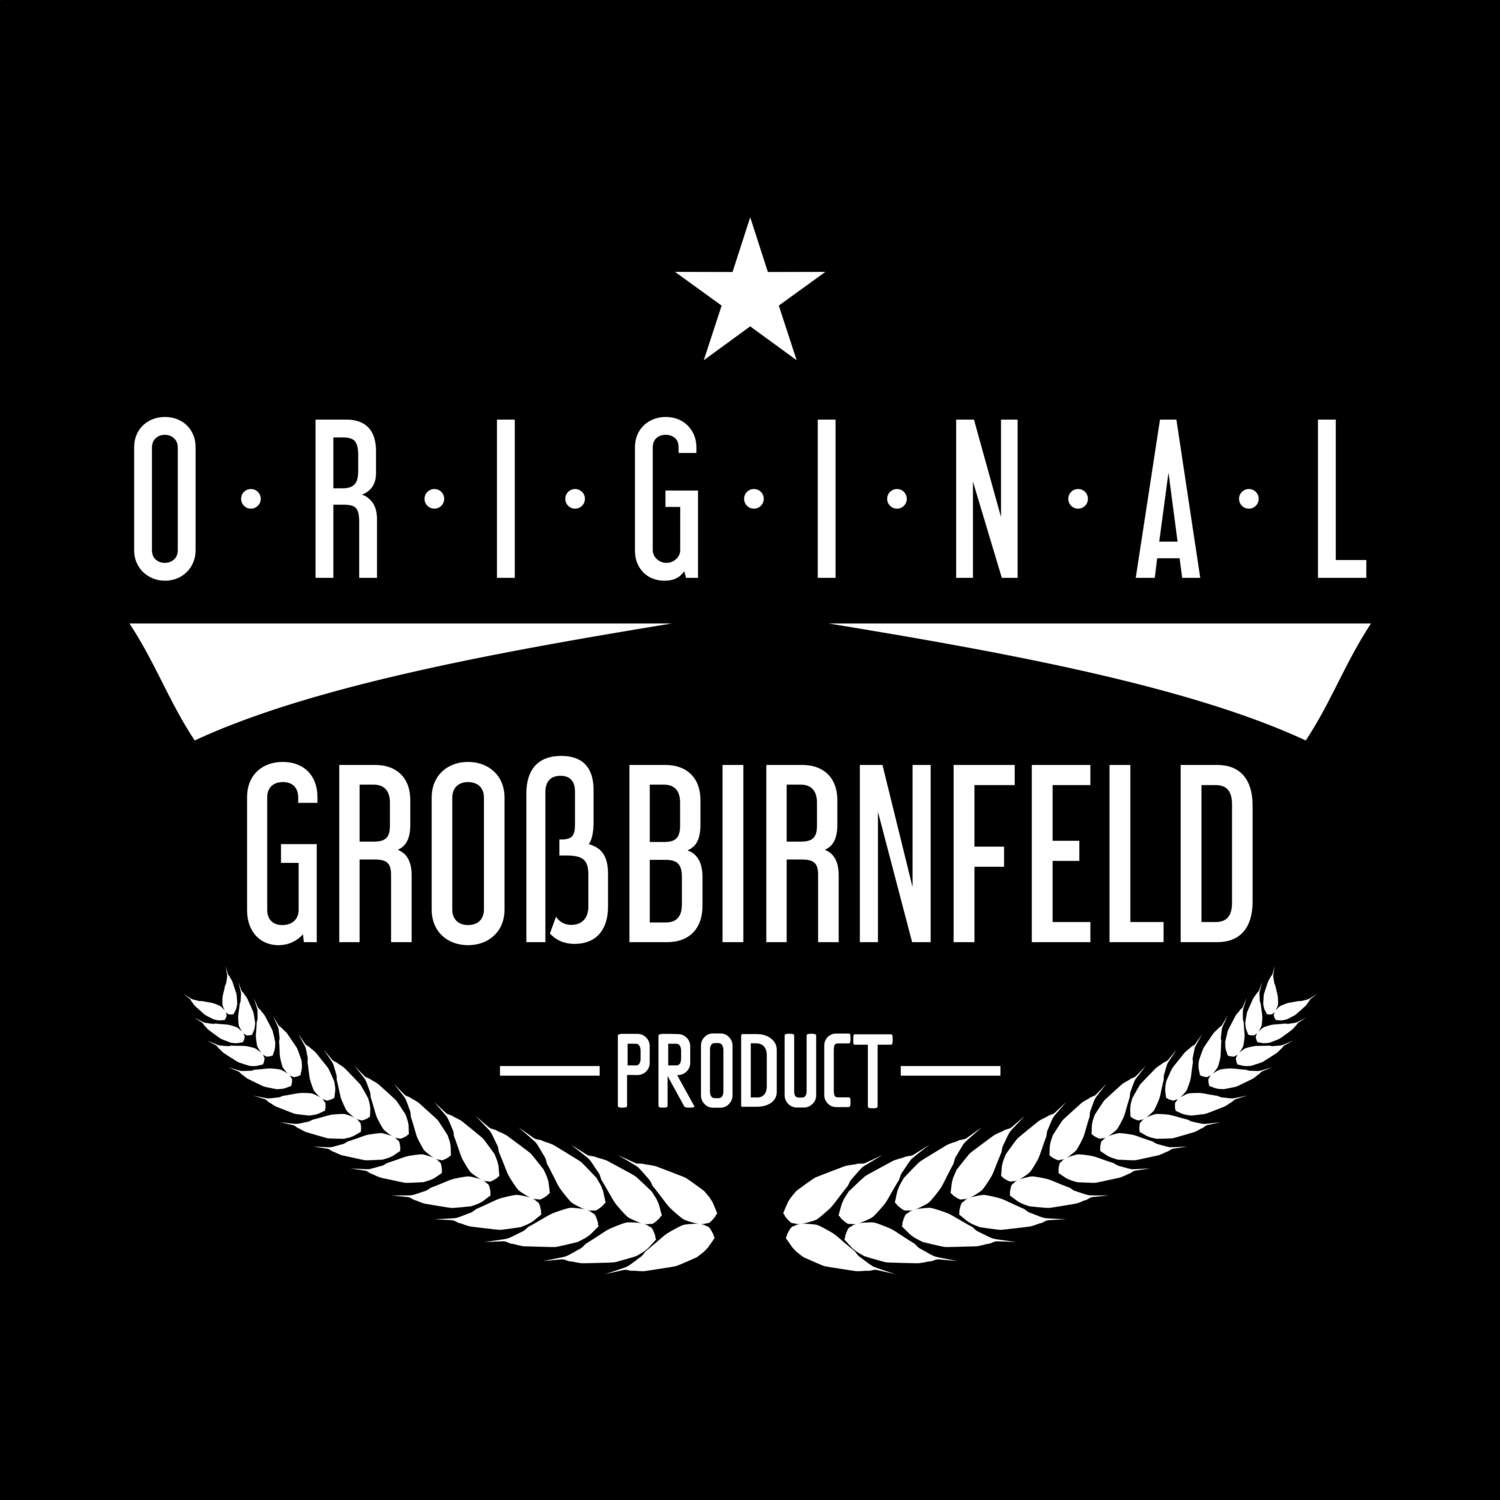 Großbirnfeld T-Shirt »Original Product«